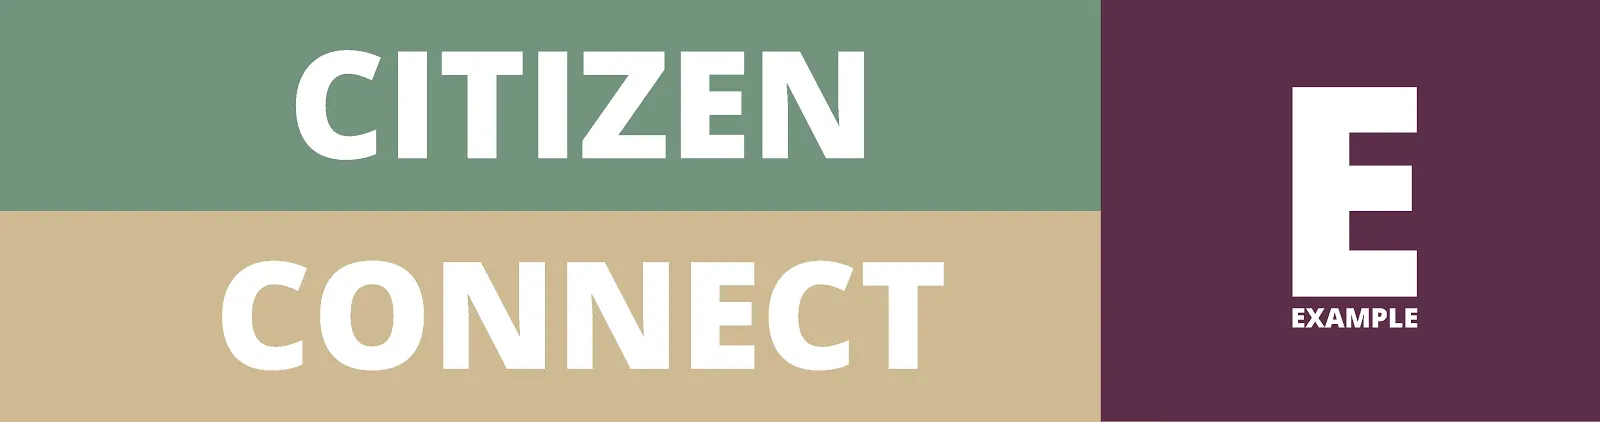 Citizen Connect Advertising